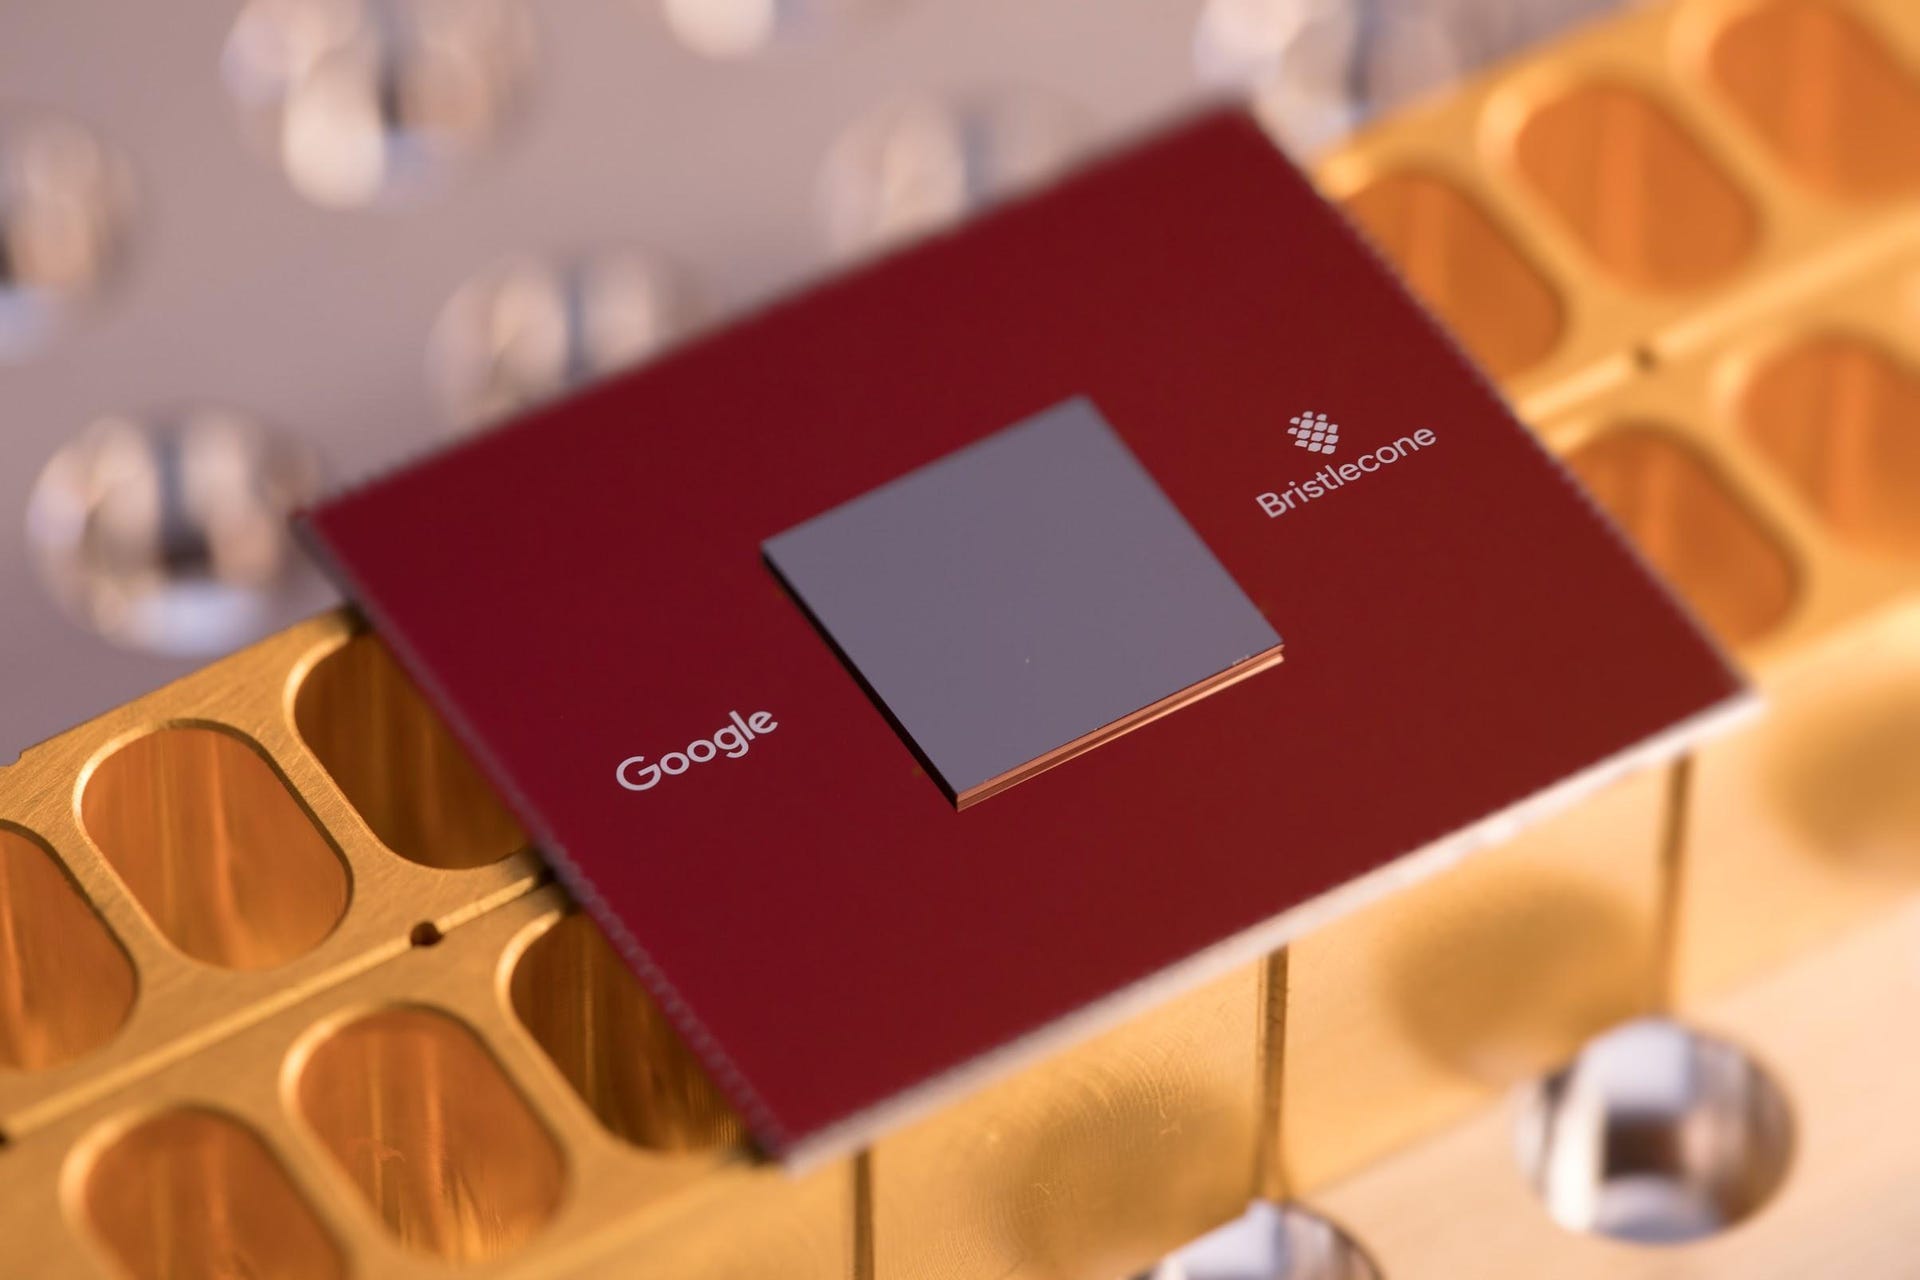 Google's Bristlecone quantum computing chip